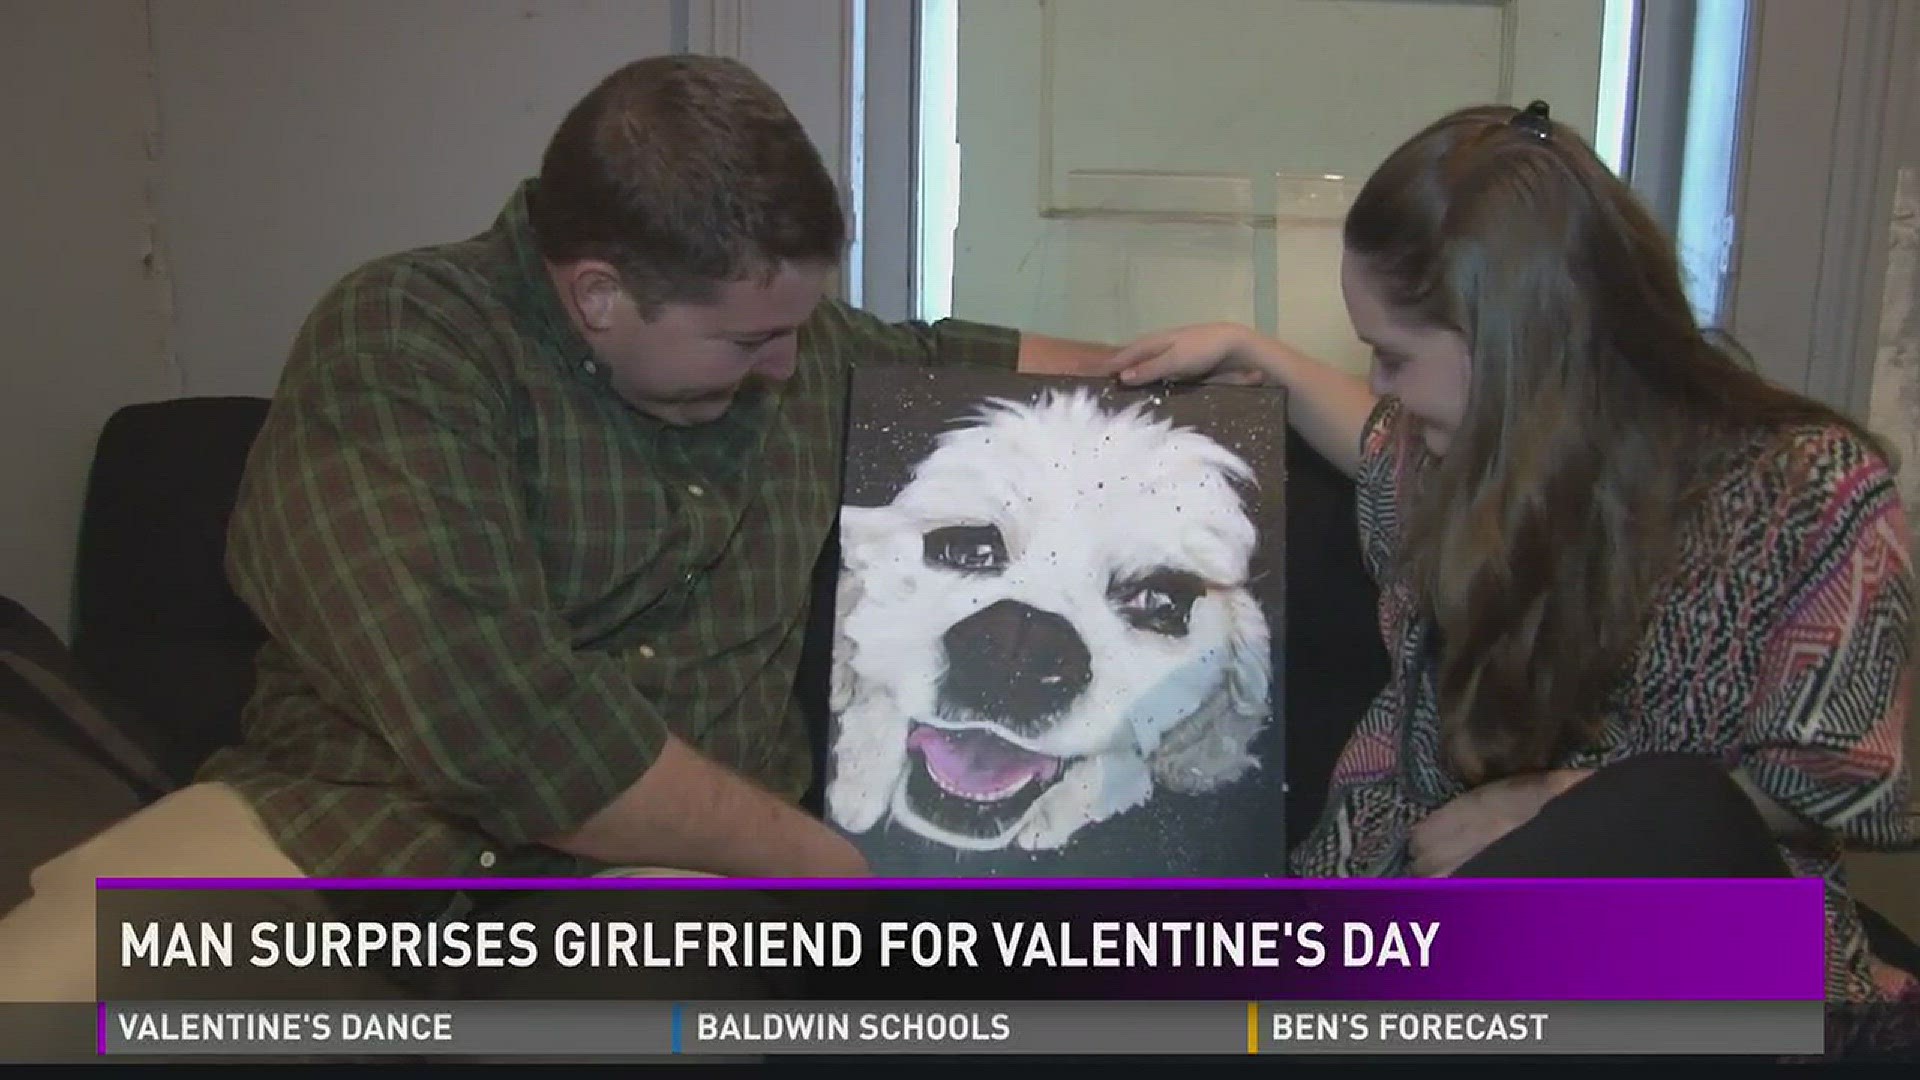 Man surprises girlfriend for Valentine's Day